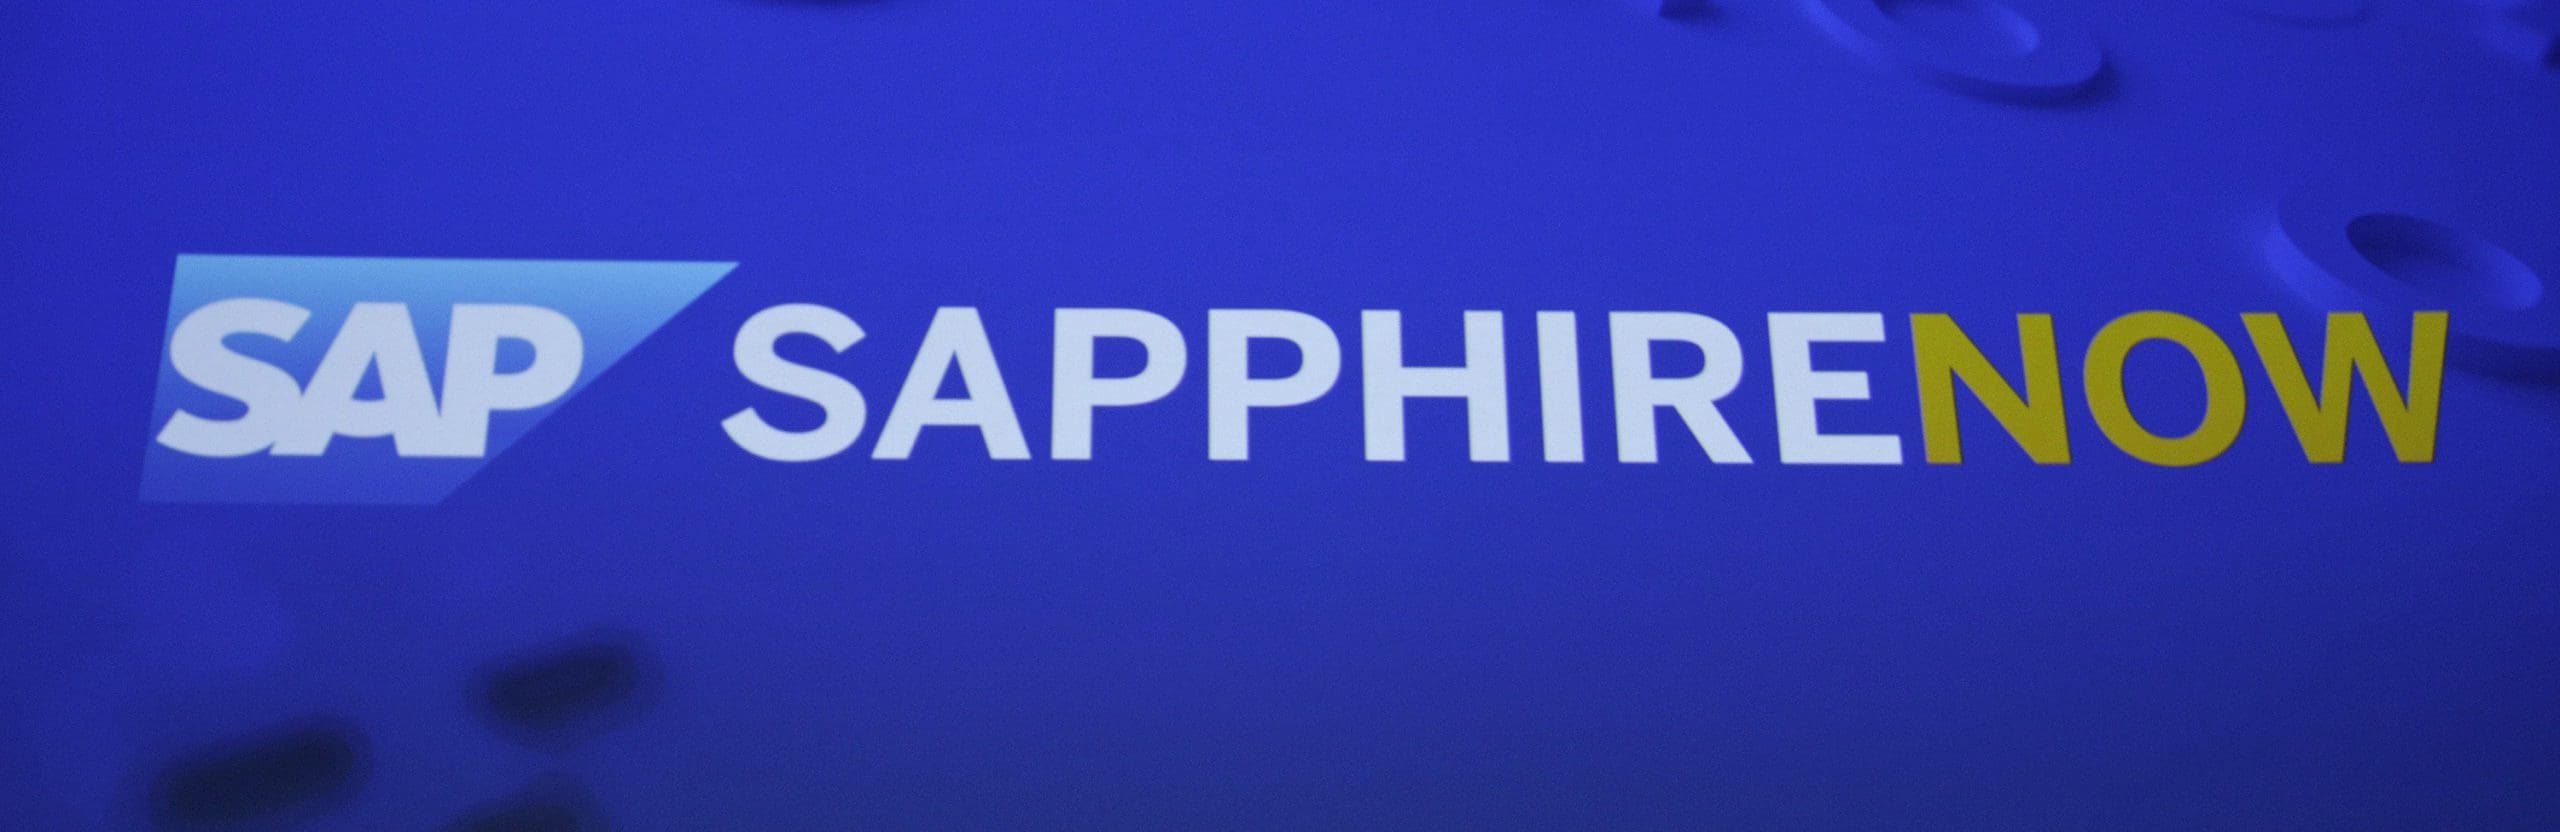 Sapphire now 2020 HCM